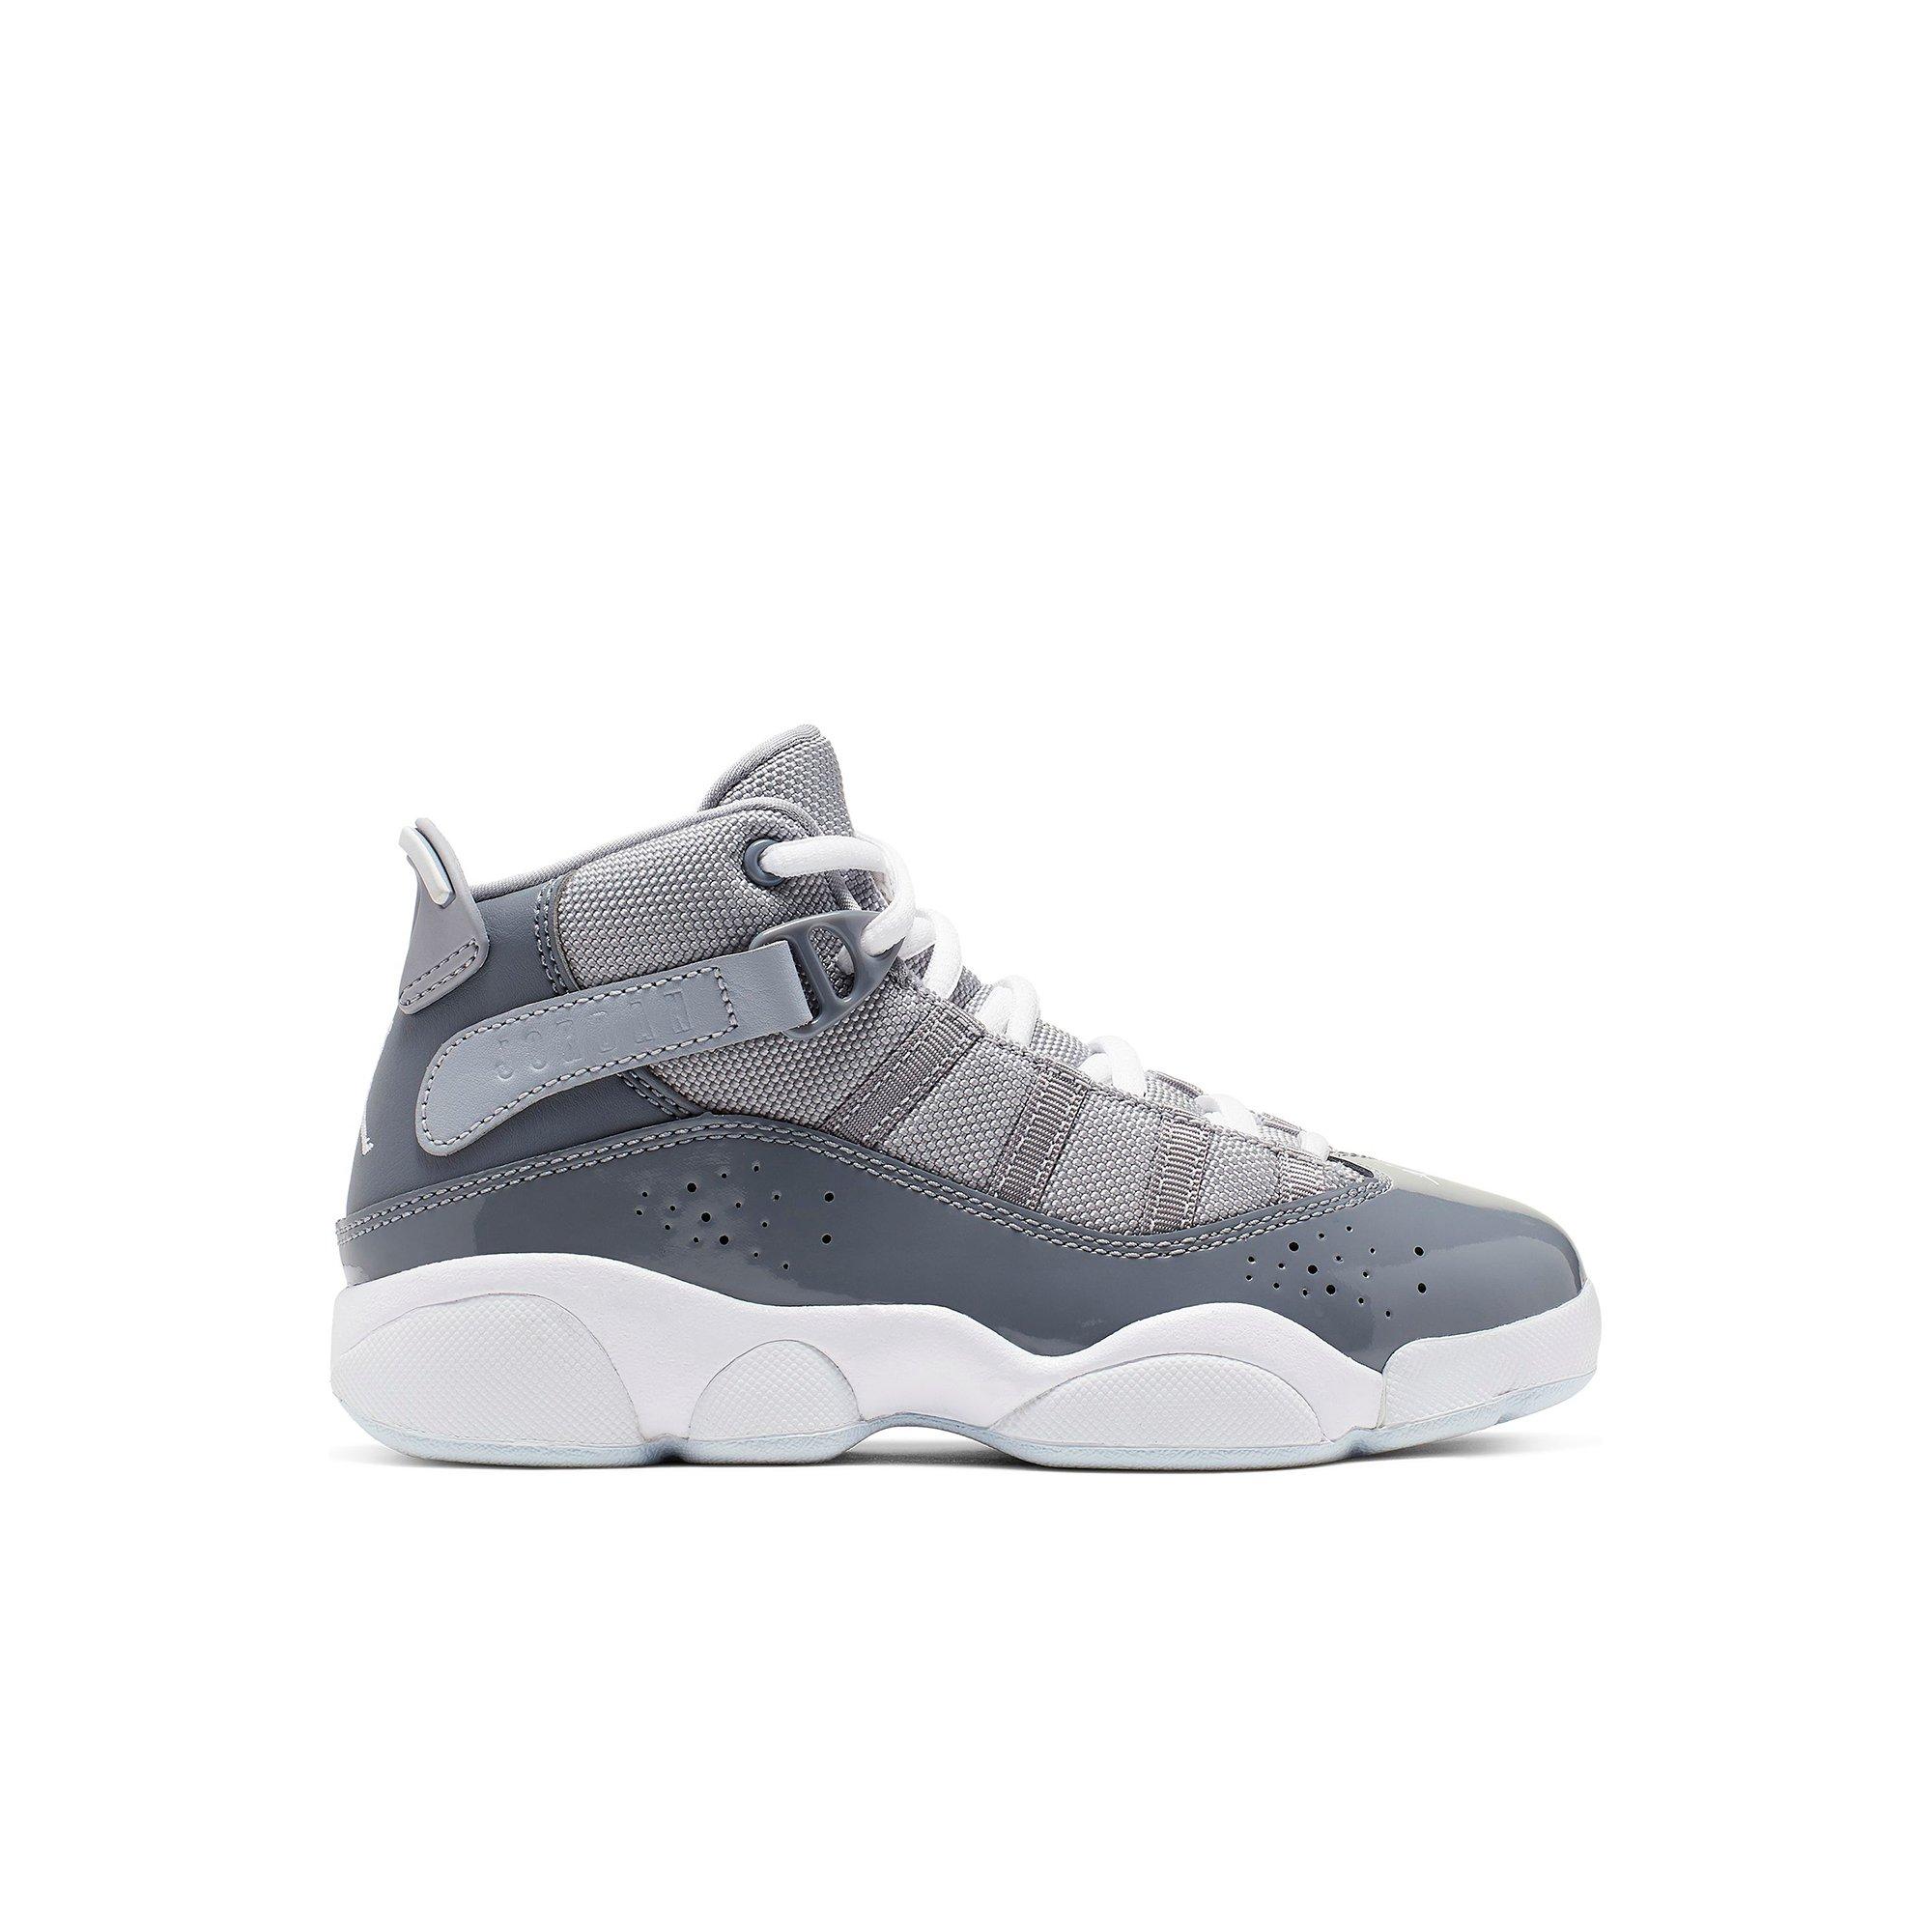 Jordan 6 Rings Cool Grey White Preschool Kids Basketball Shoe